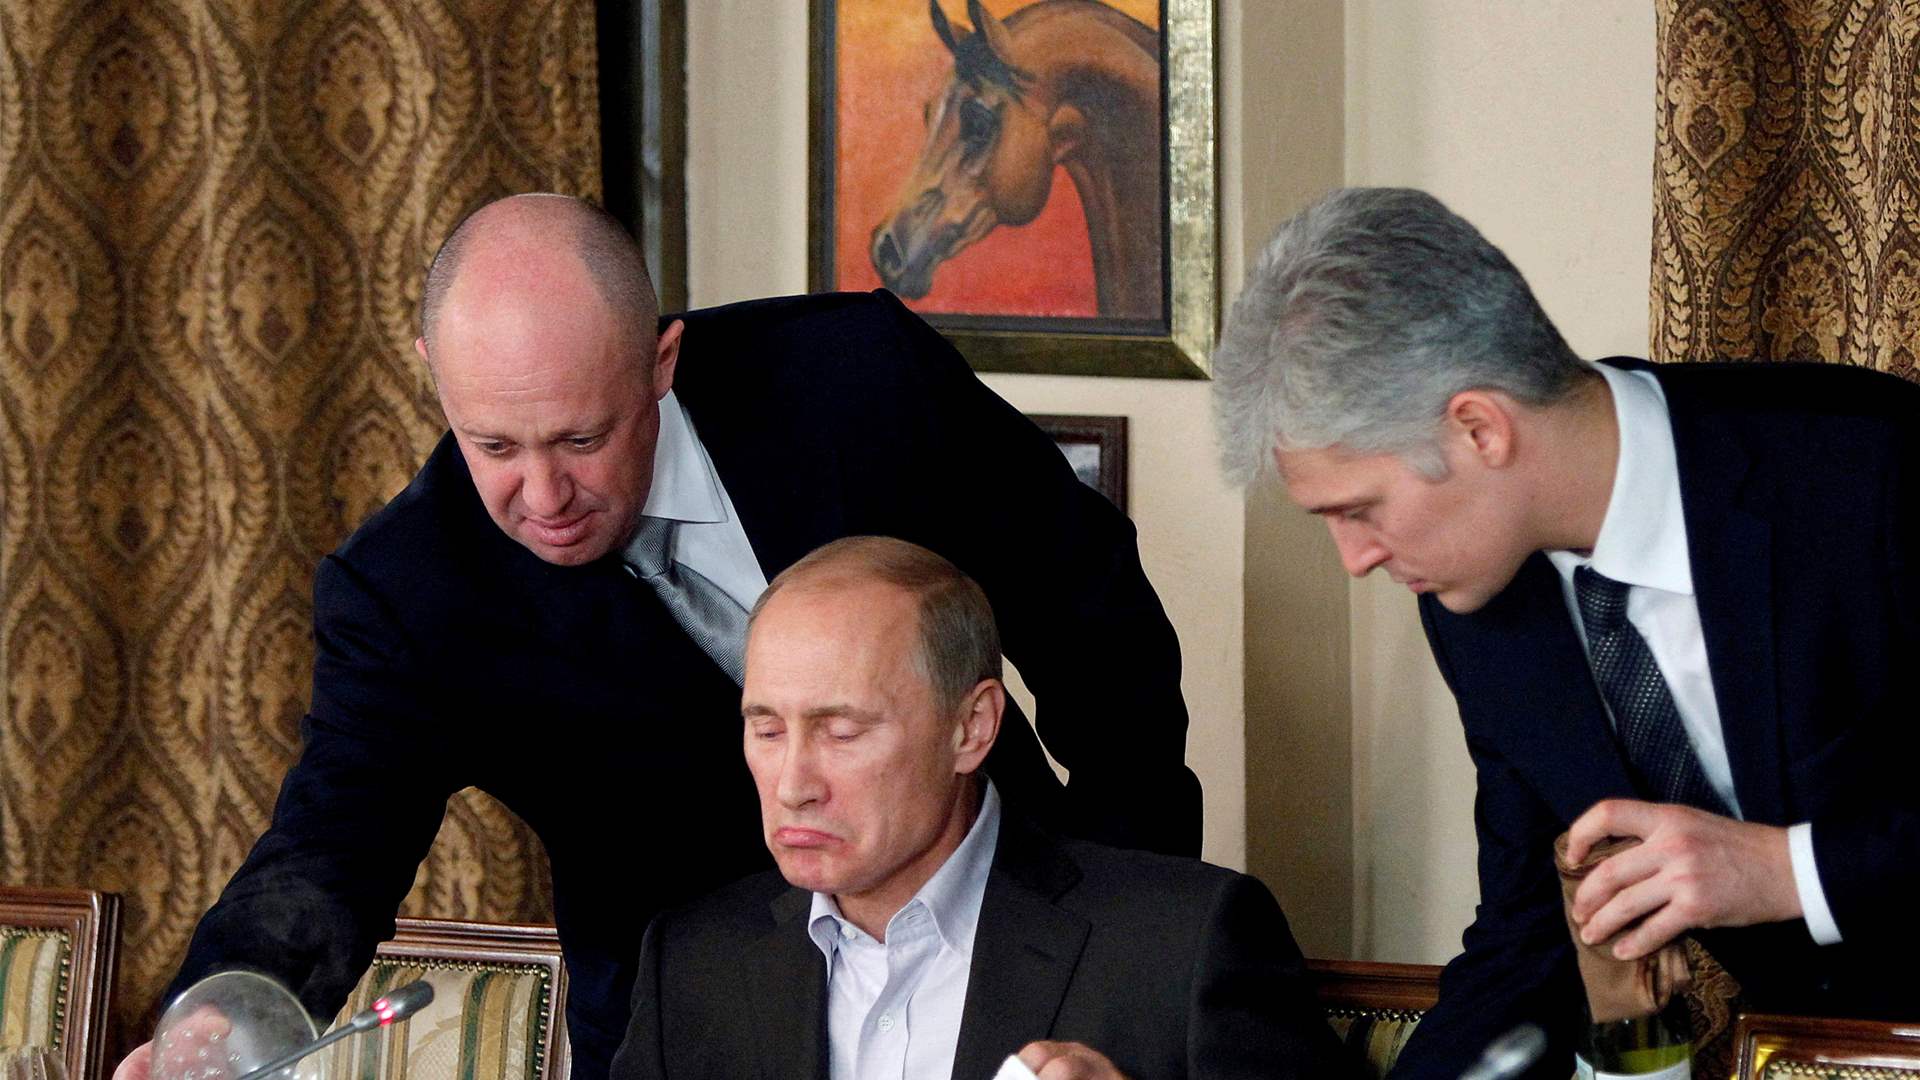 Putin met Prigozhin in the Kremlin on June 29, after the failed revolt